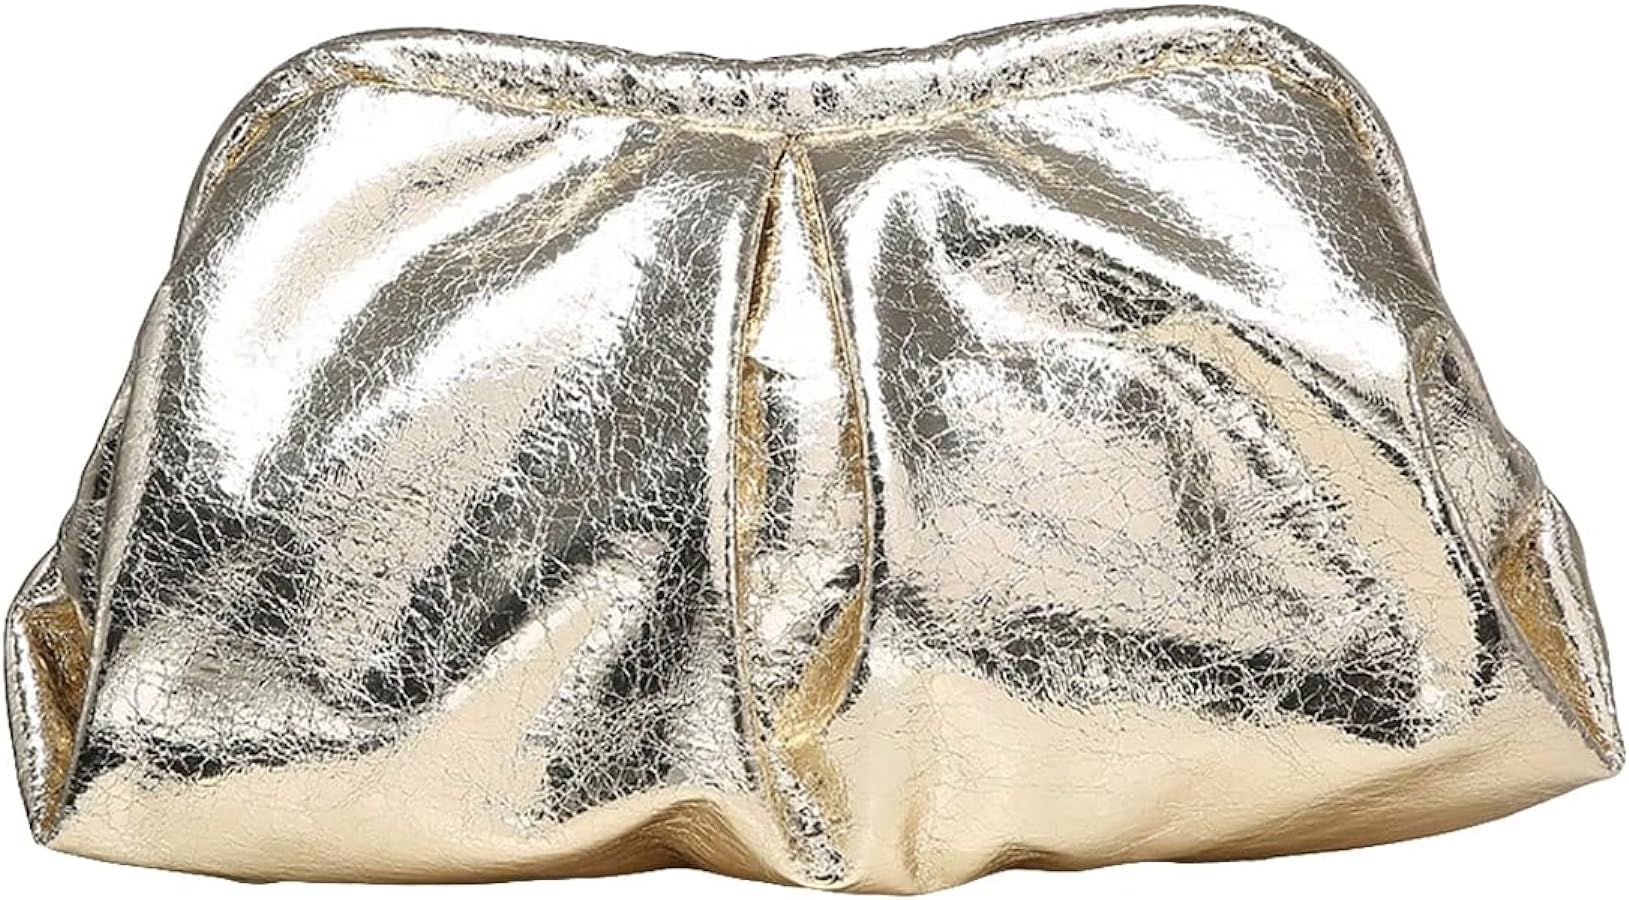 Verdusa Women's PU Leather Clutch Handbags Ruched Bag Purse | Amazon (US)